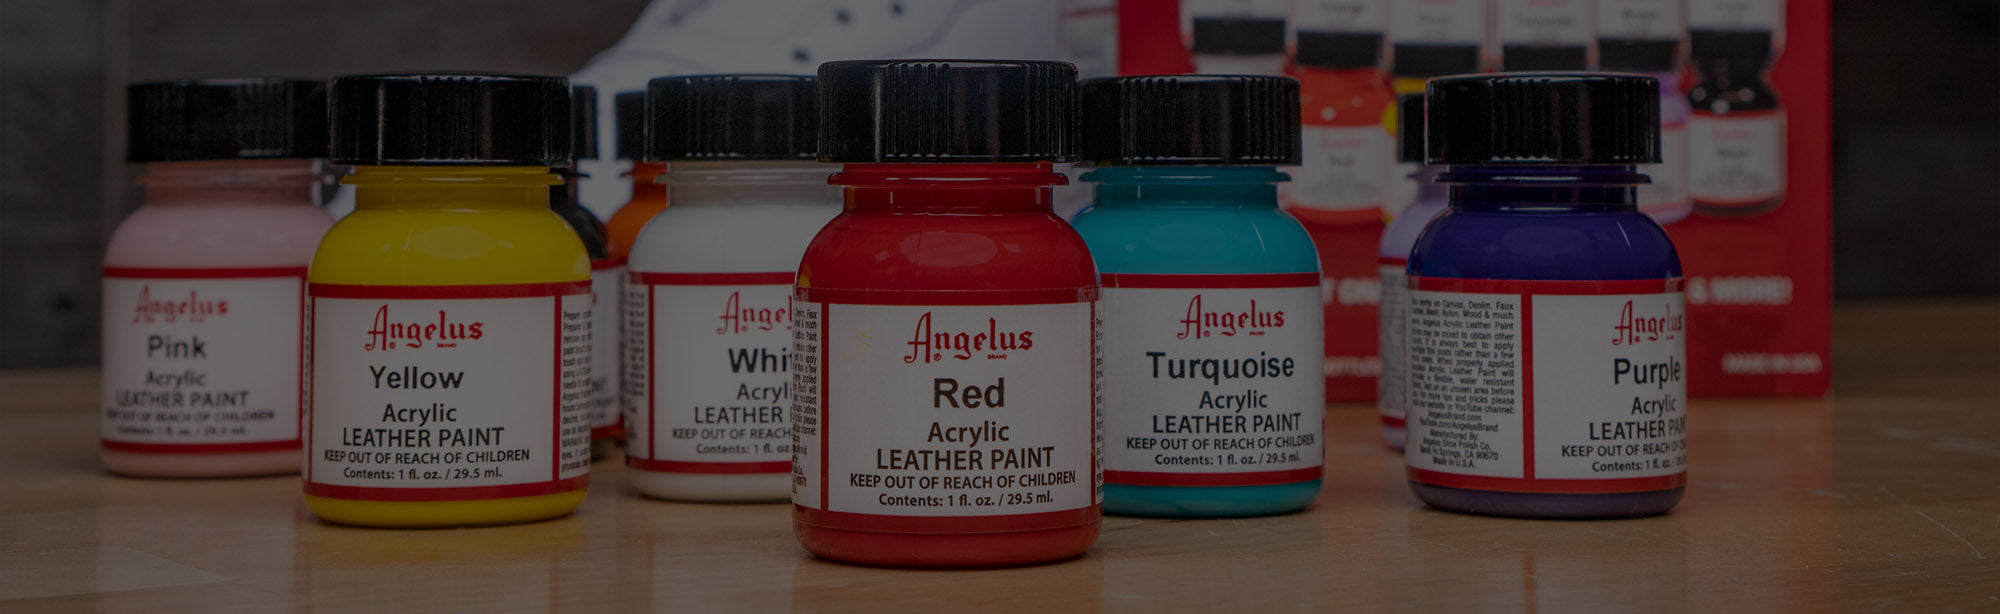 Angelus Neon Acrylic Leather Paint Starter Kit - 1 Ounce, Set of 6